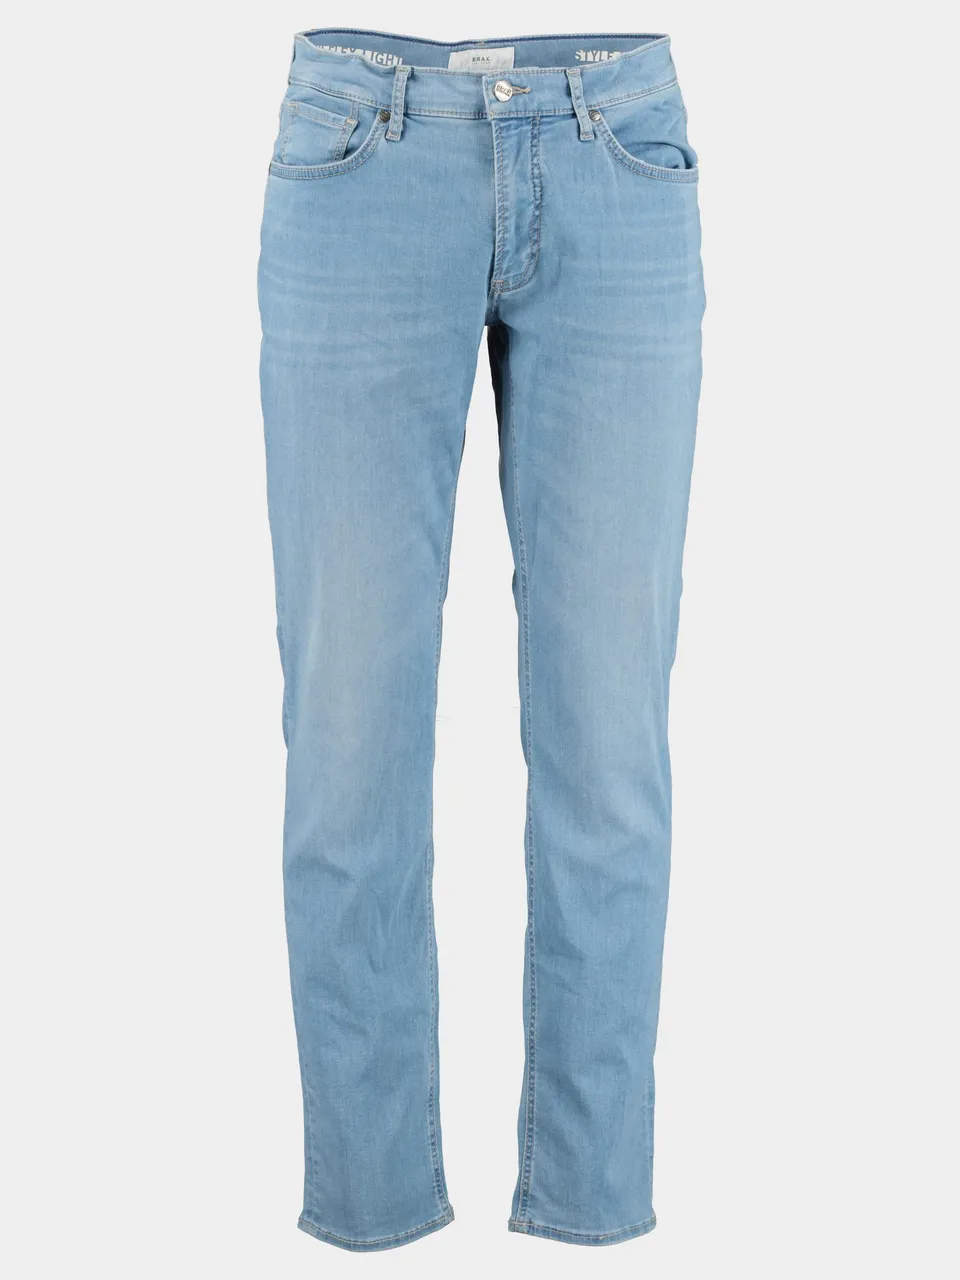 Brax 5-pocket jeans style.chuck 81-6278 07953020/28